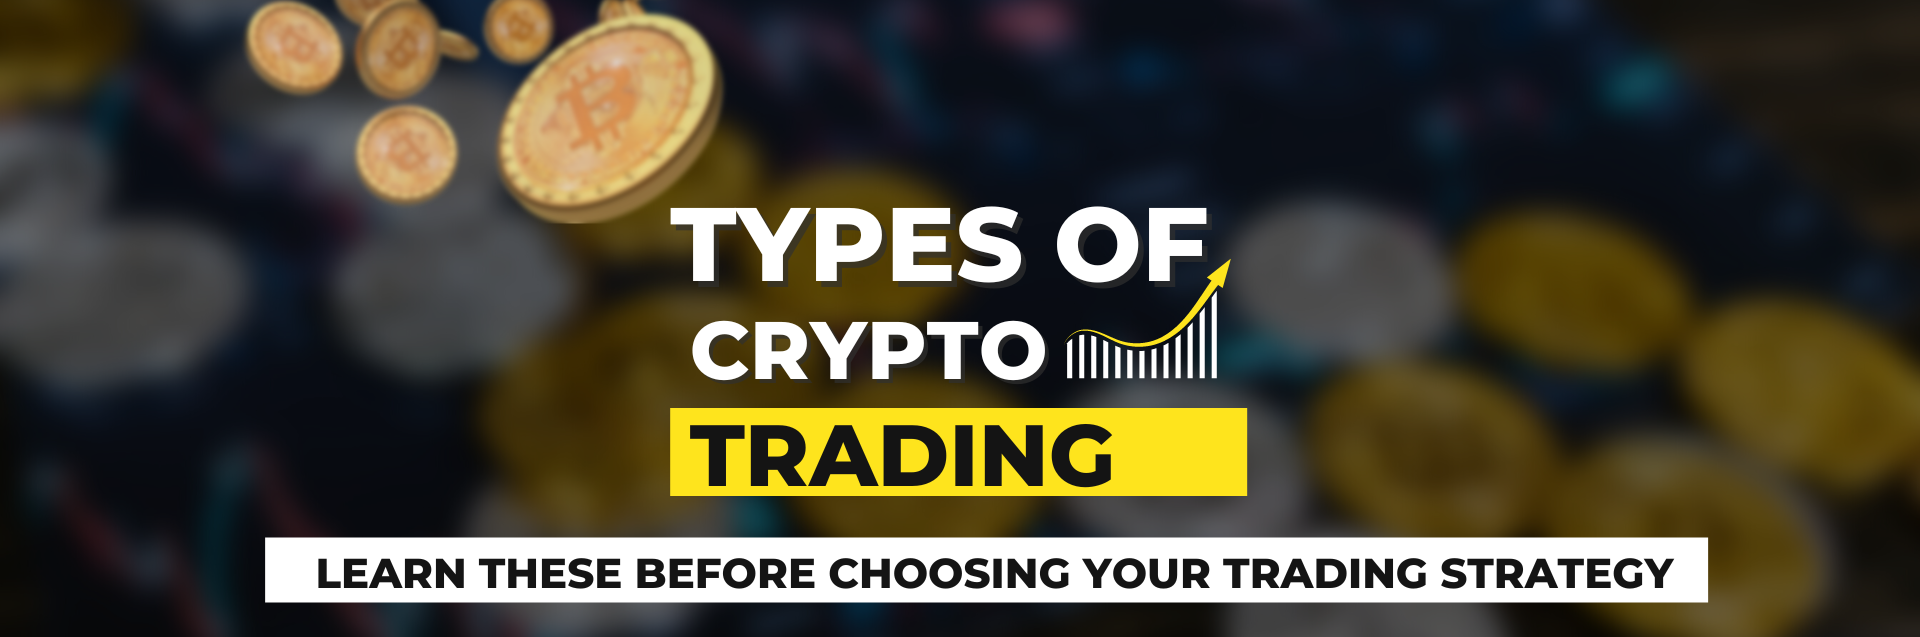 Types of Crypto Trading